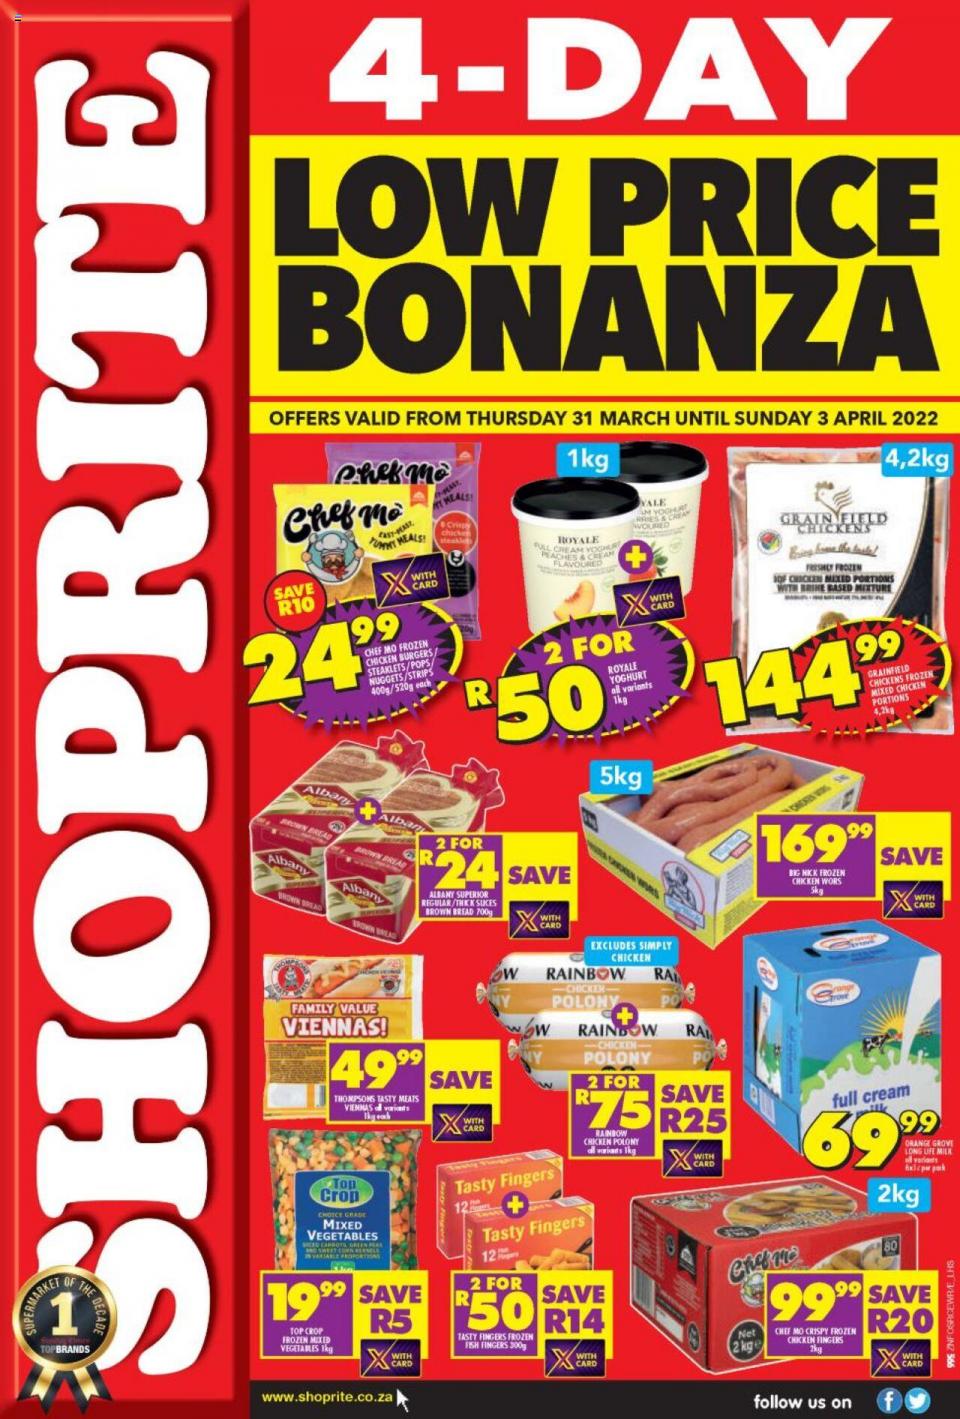 Shoprite Specials 4-DAY LOW PRICE BONANZA 31 Mar – 3 Apr 2022